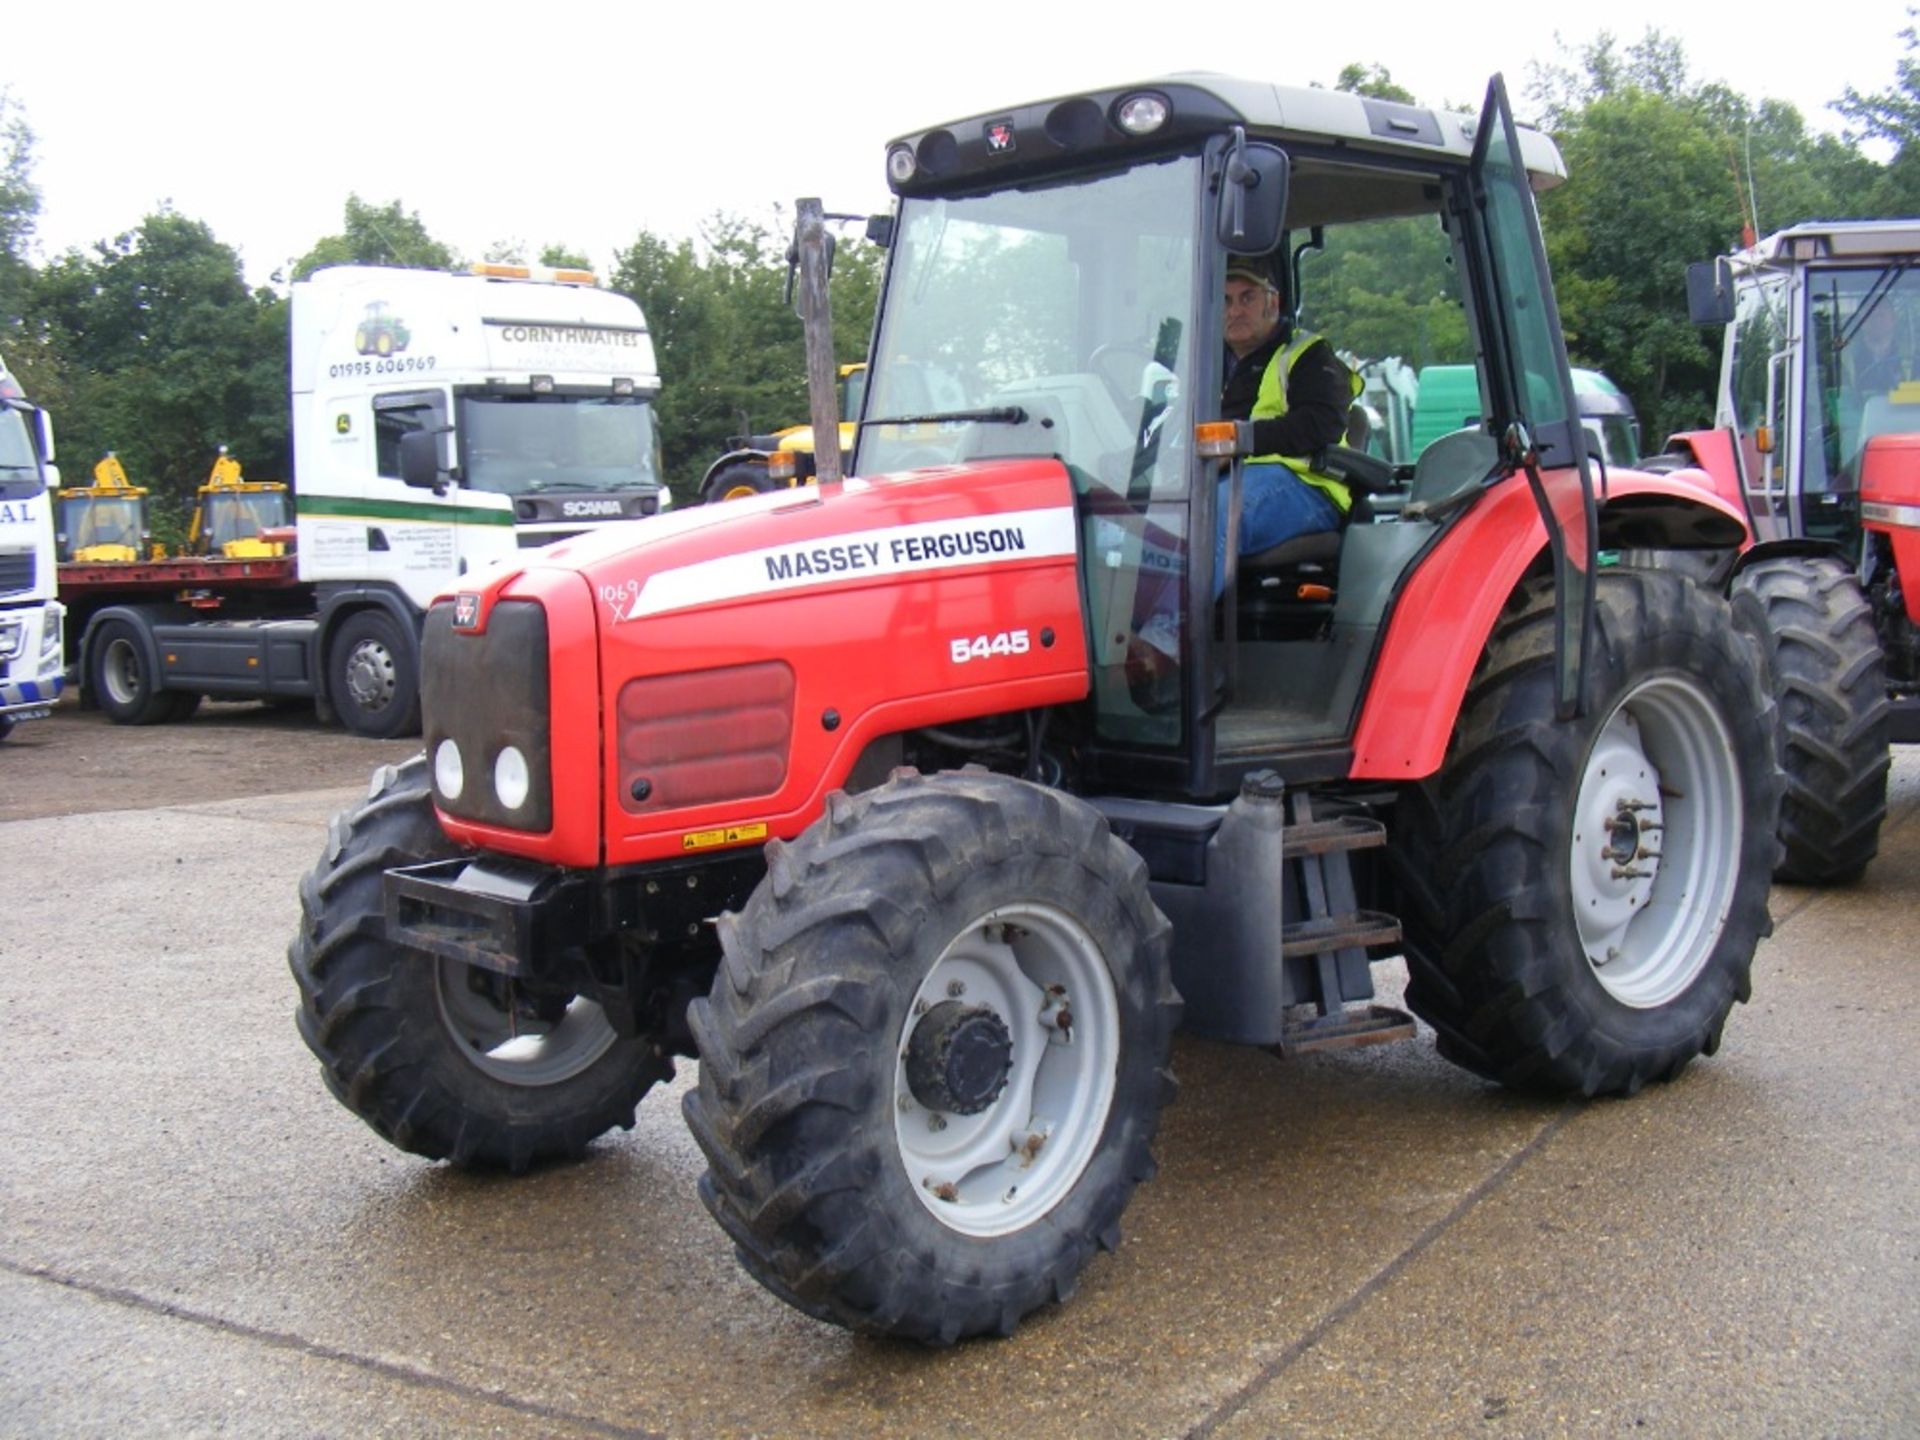 2004 Massey Ferguson 5445 Tractor - Image 4 of 6